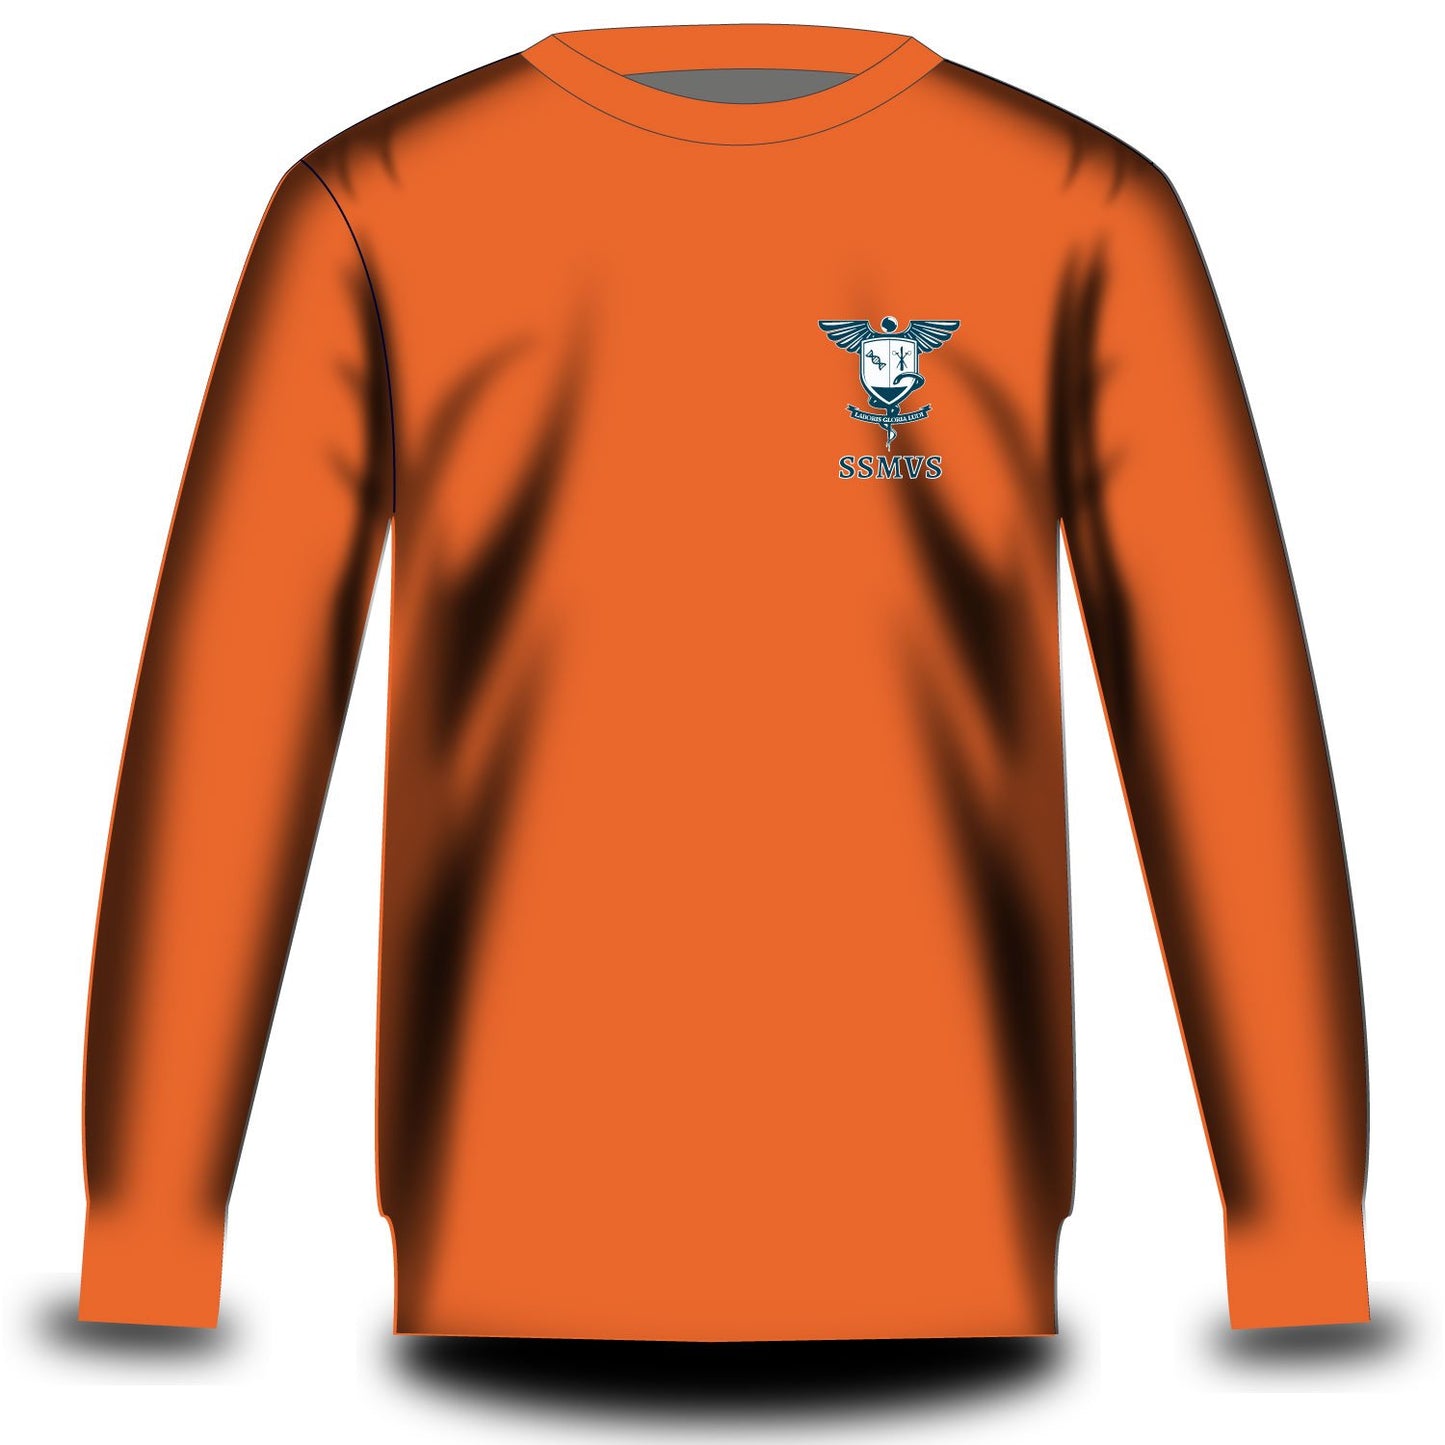 sidney sussex medical and veterinary society sweatshirt burnt orange